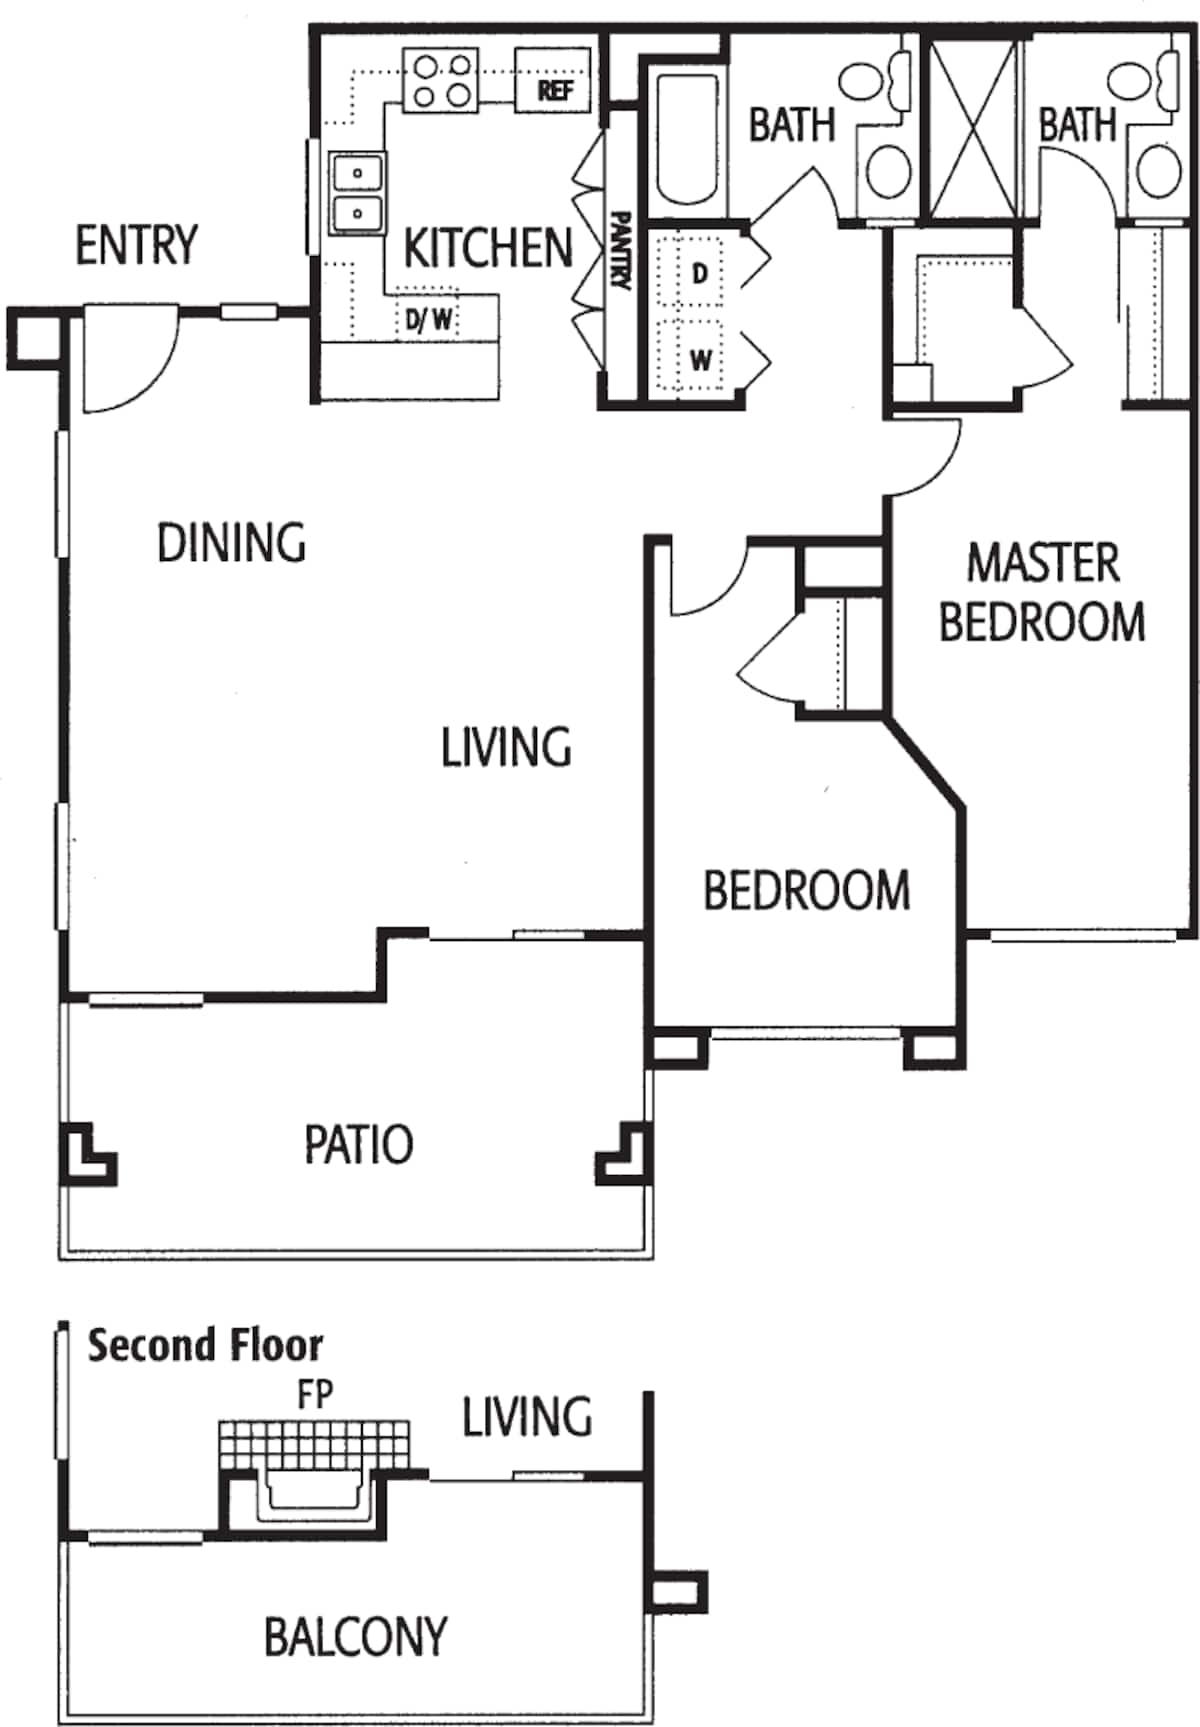 Floorplan diagram for Brentwood, showing 2 bedroom